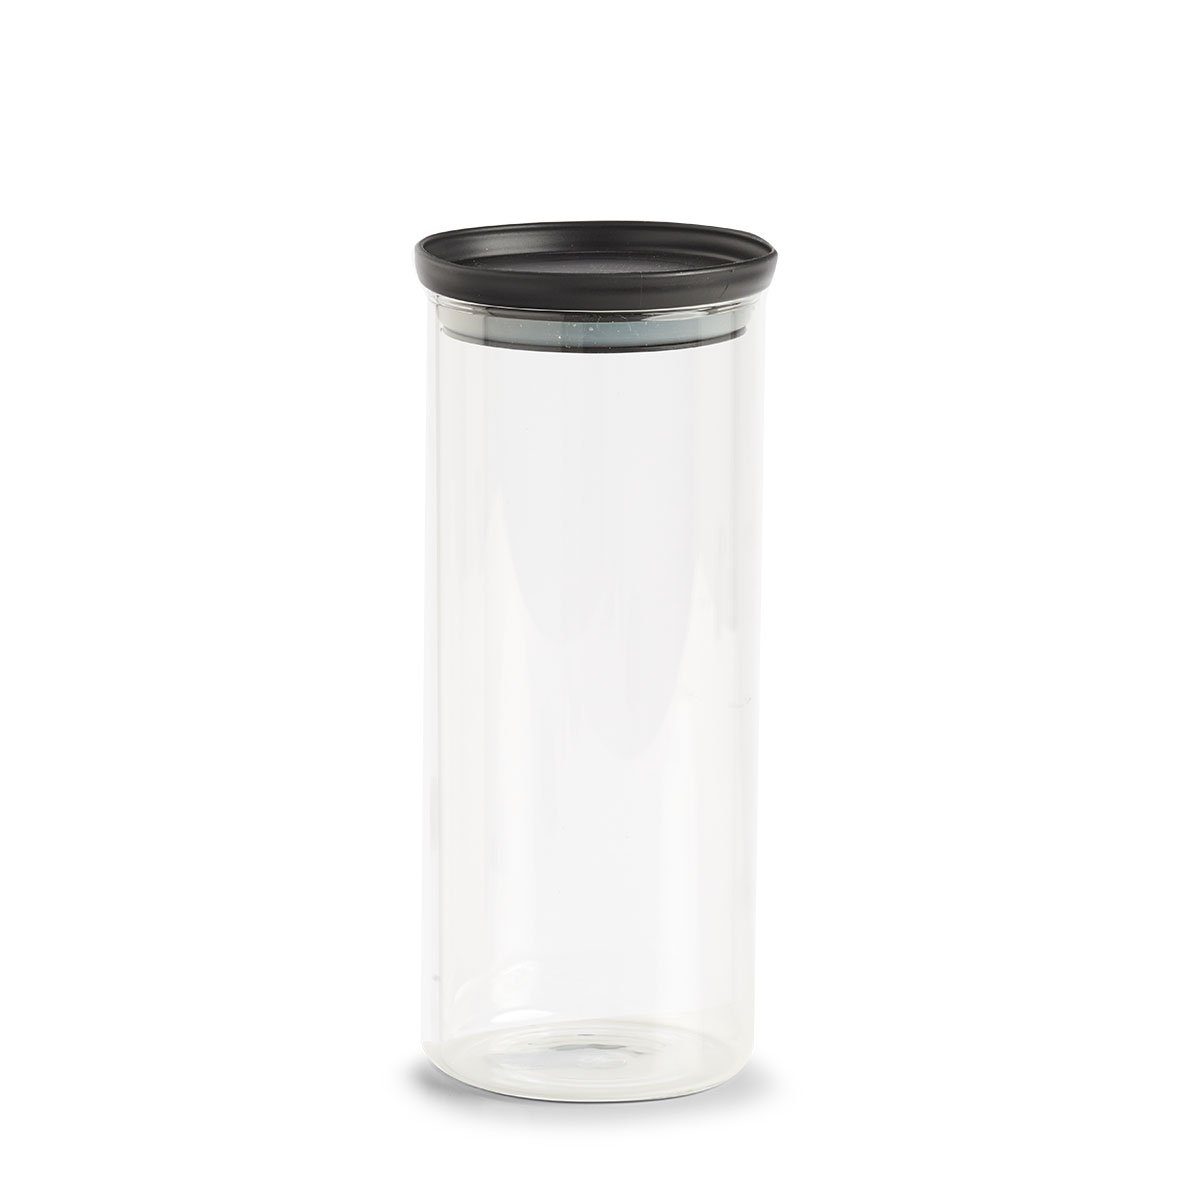 Zeller Present Vorratsglas Vorratsglas m. Kunststoffdeckel, Borosilikat Glas/ Kunststoff, 1250 ml, schwarz, Ø10,3 x 23,6 cm | Vorratsgläser